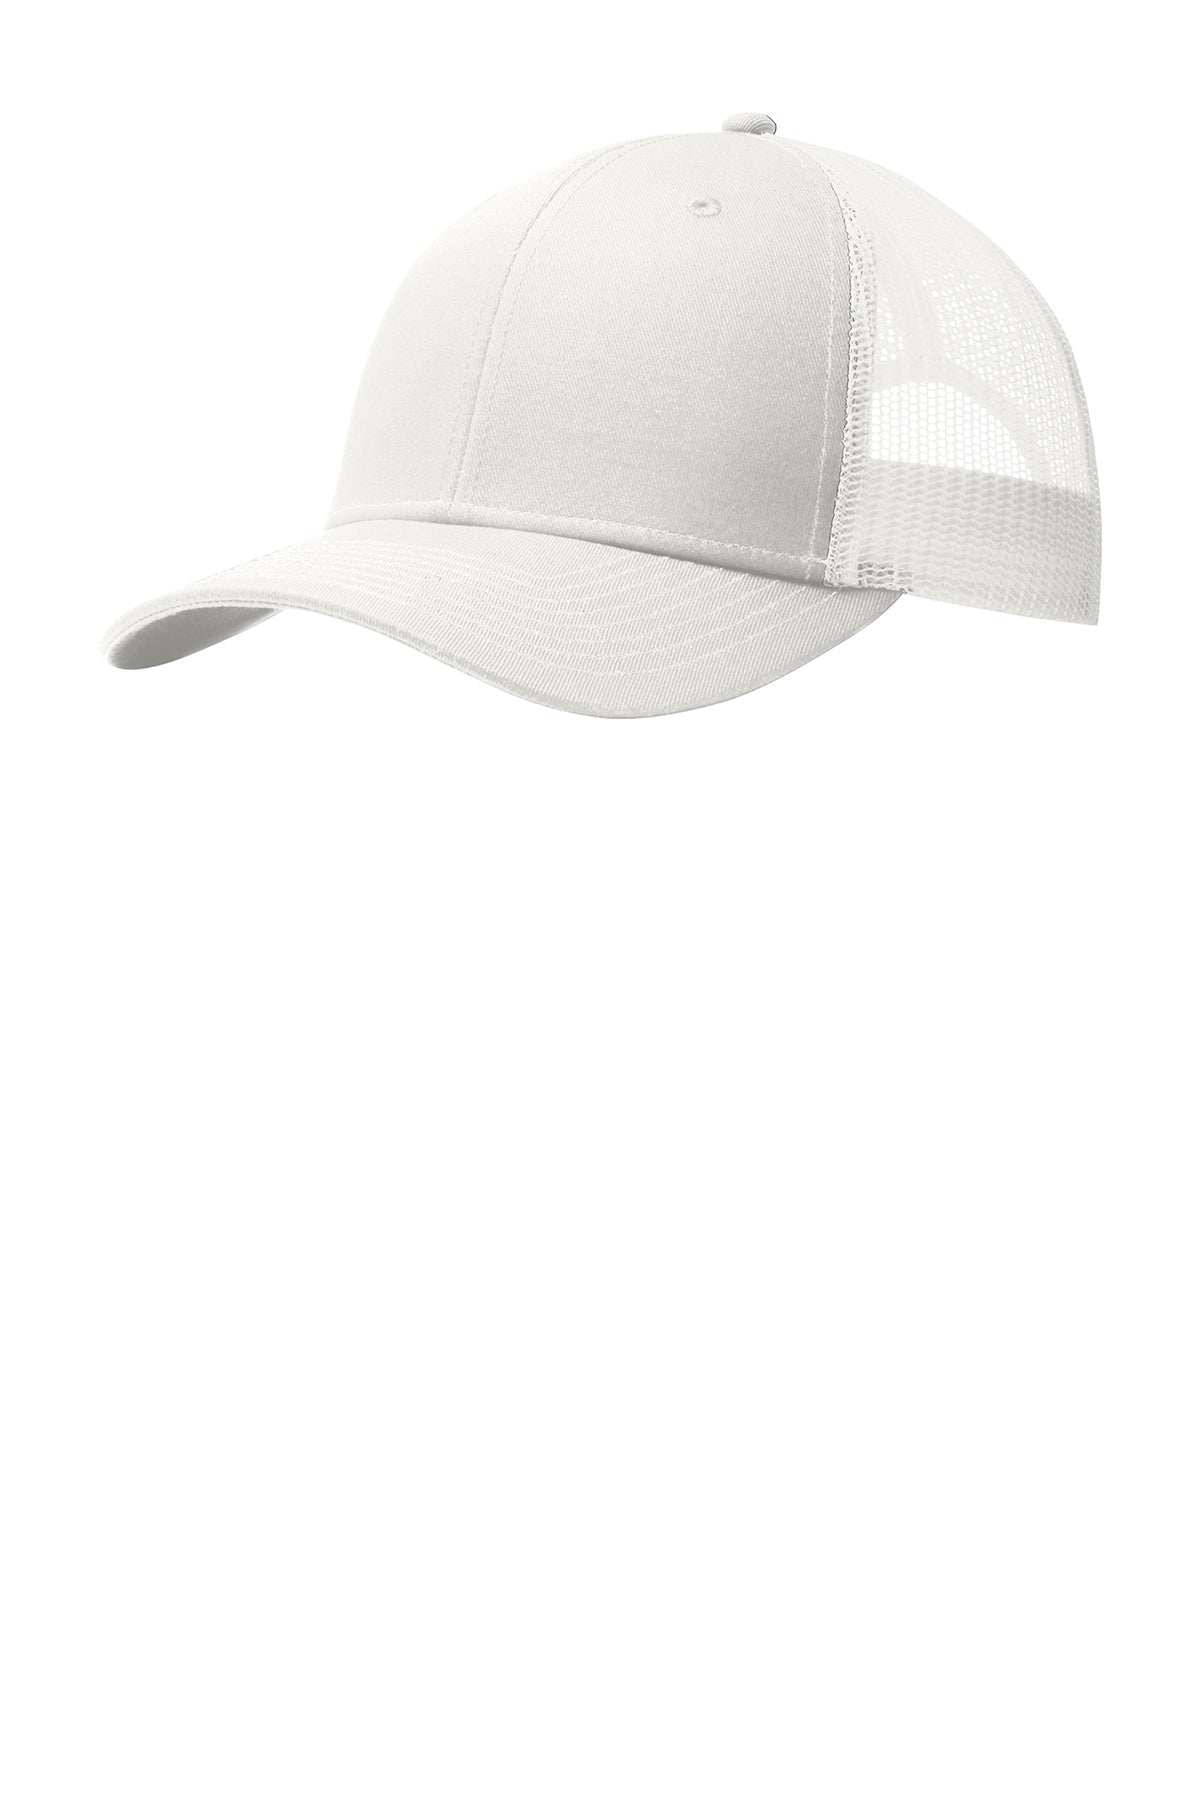 Port Authority Snapback Trucker Branded Caps, White